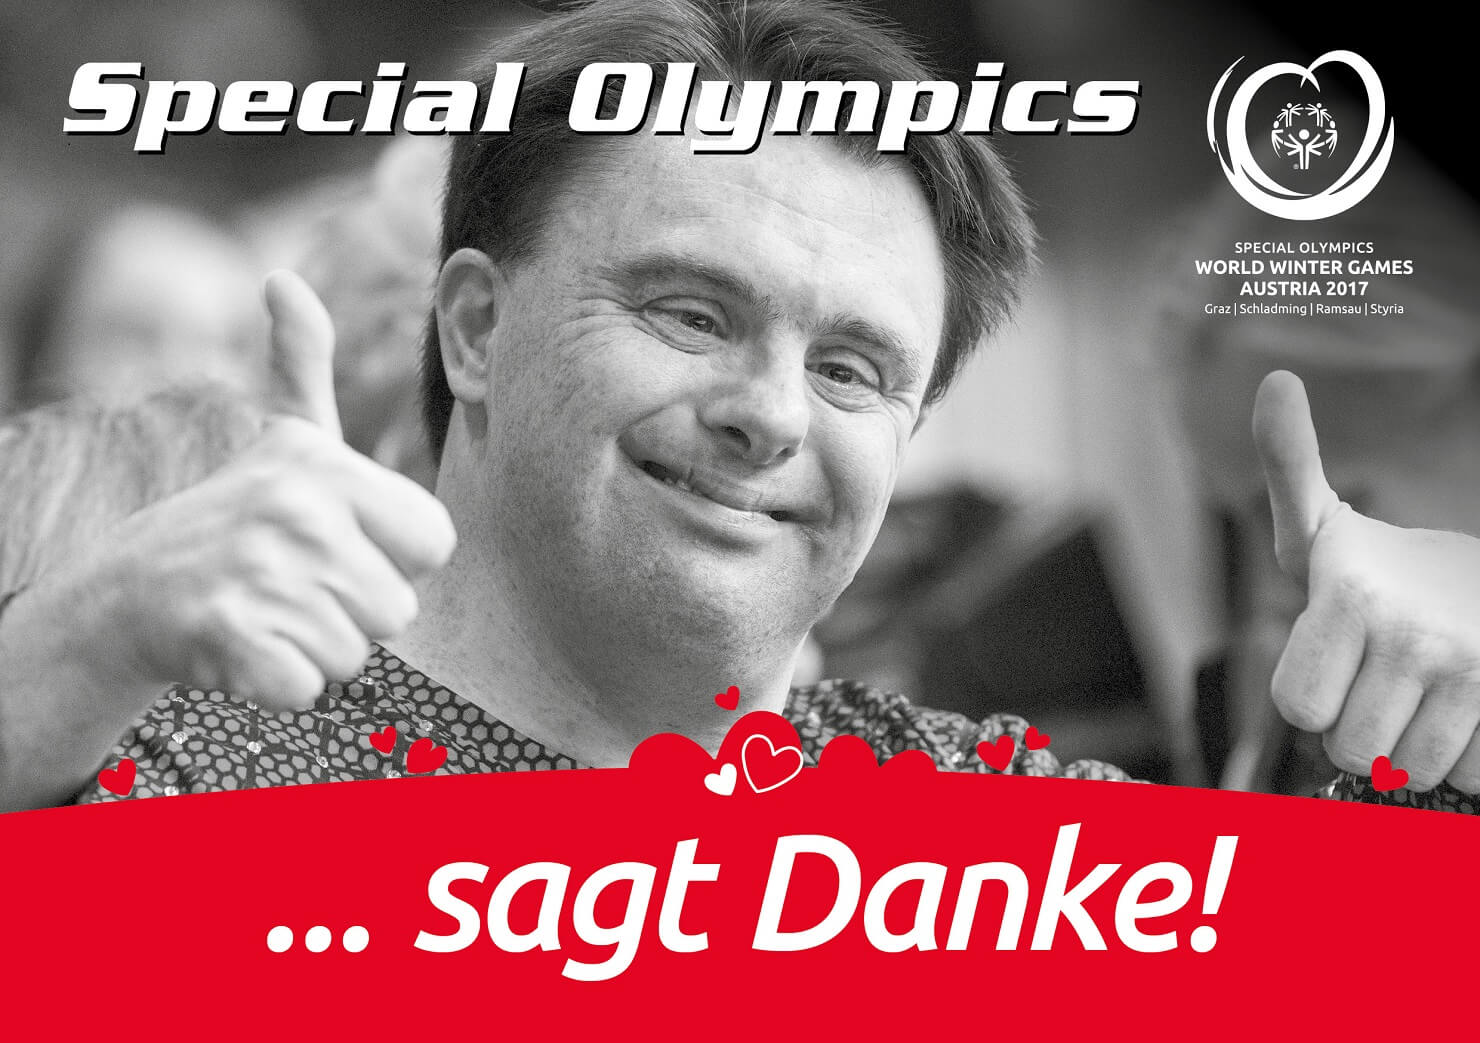 Die Special Olympics World Winter Games sagen Danke